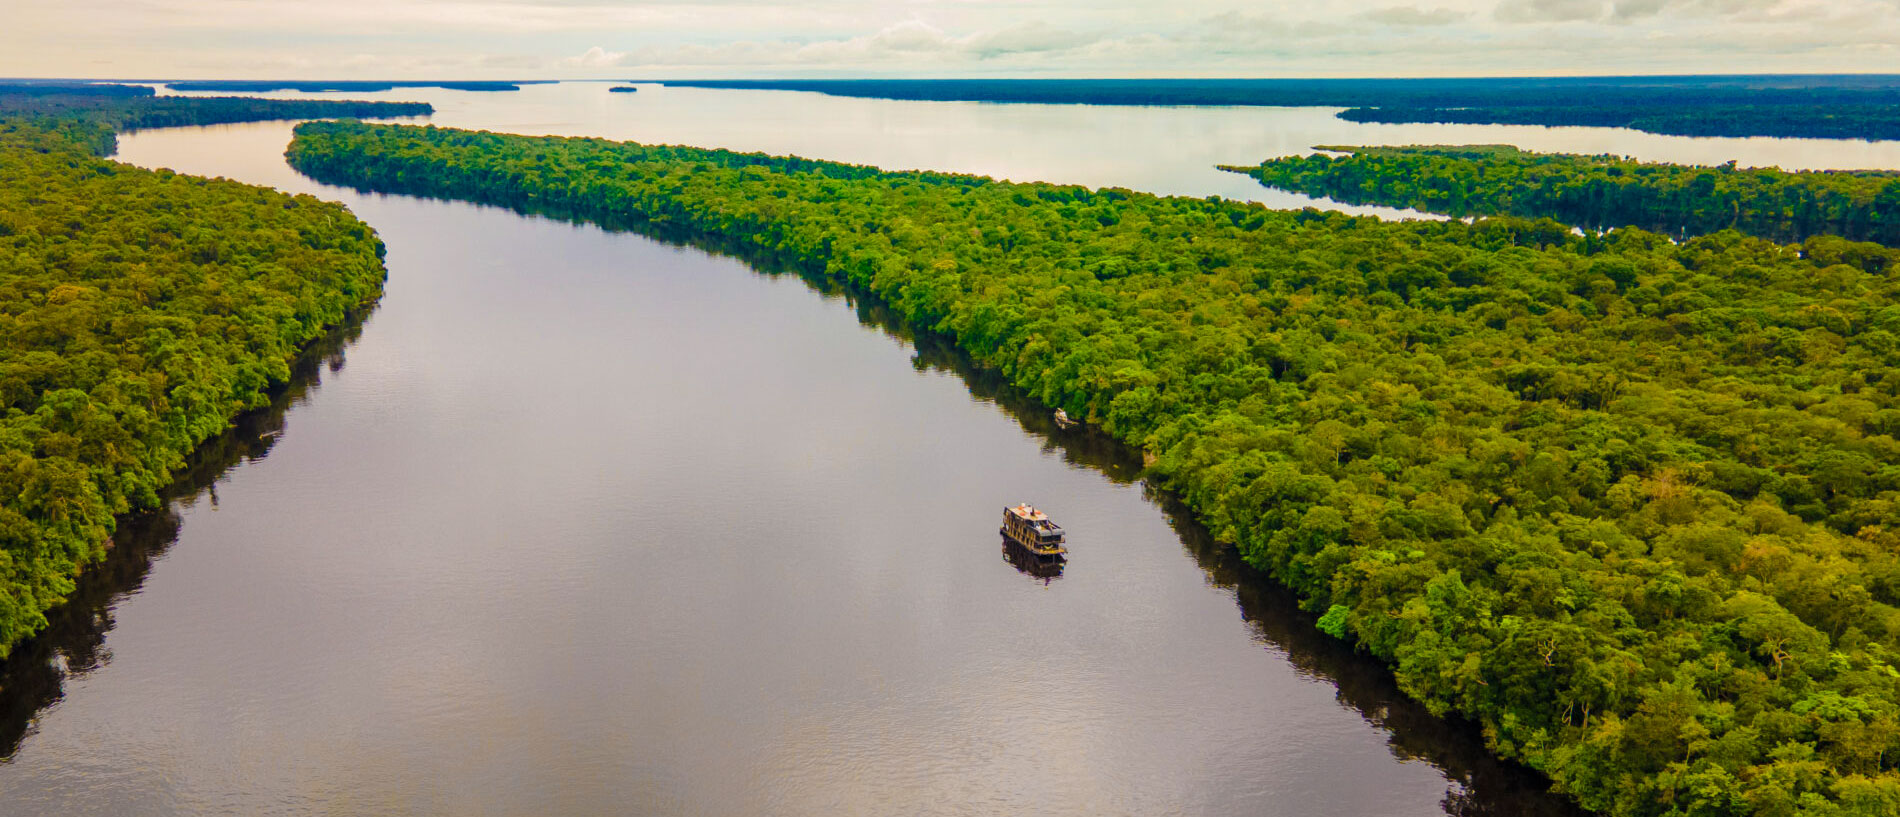 Luxury Amazon Cruise in Brazil